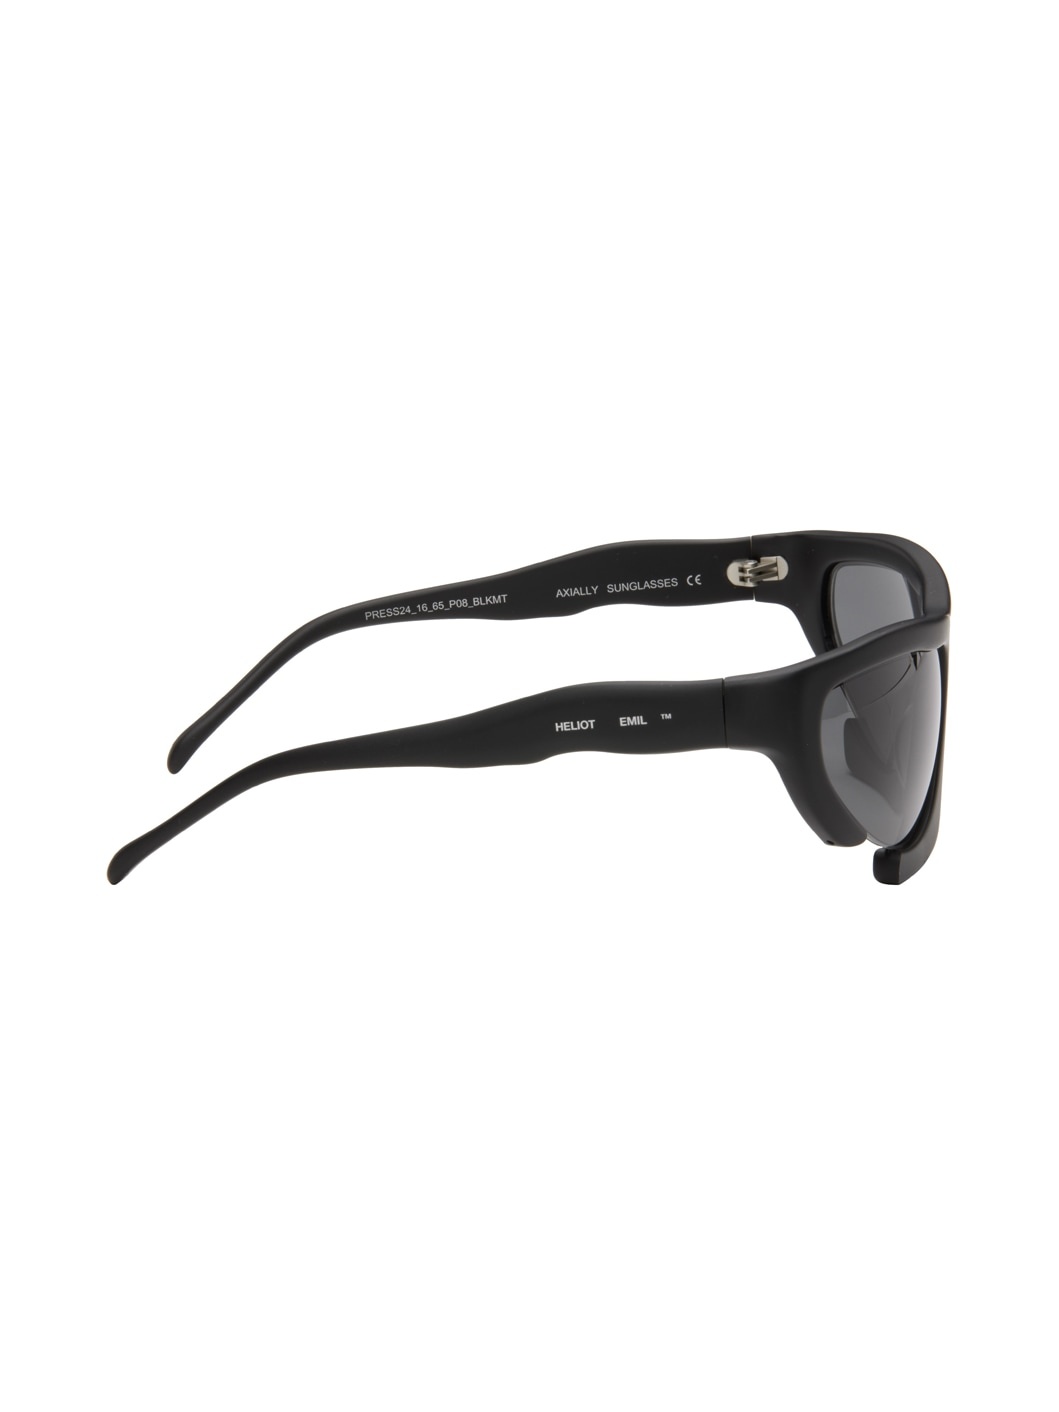 Black Wraparound Sunglasses - 2